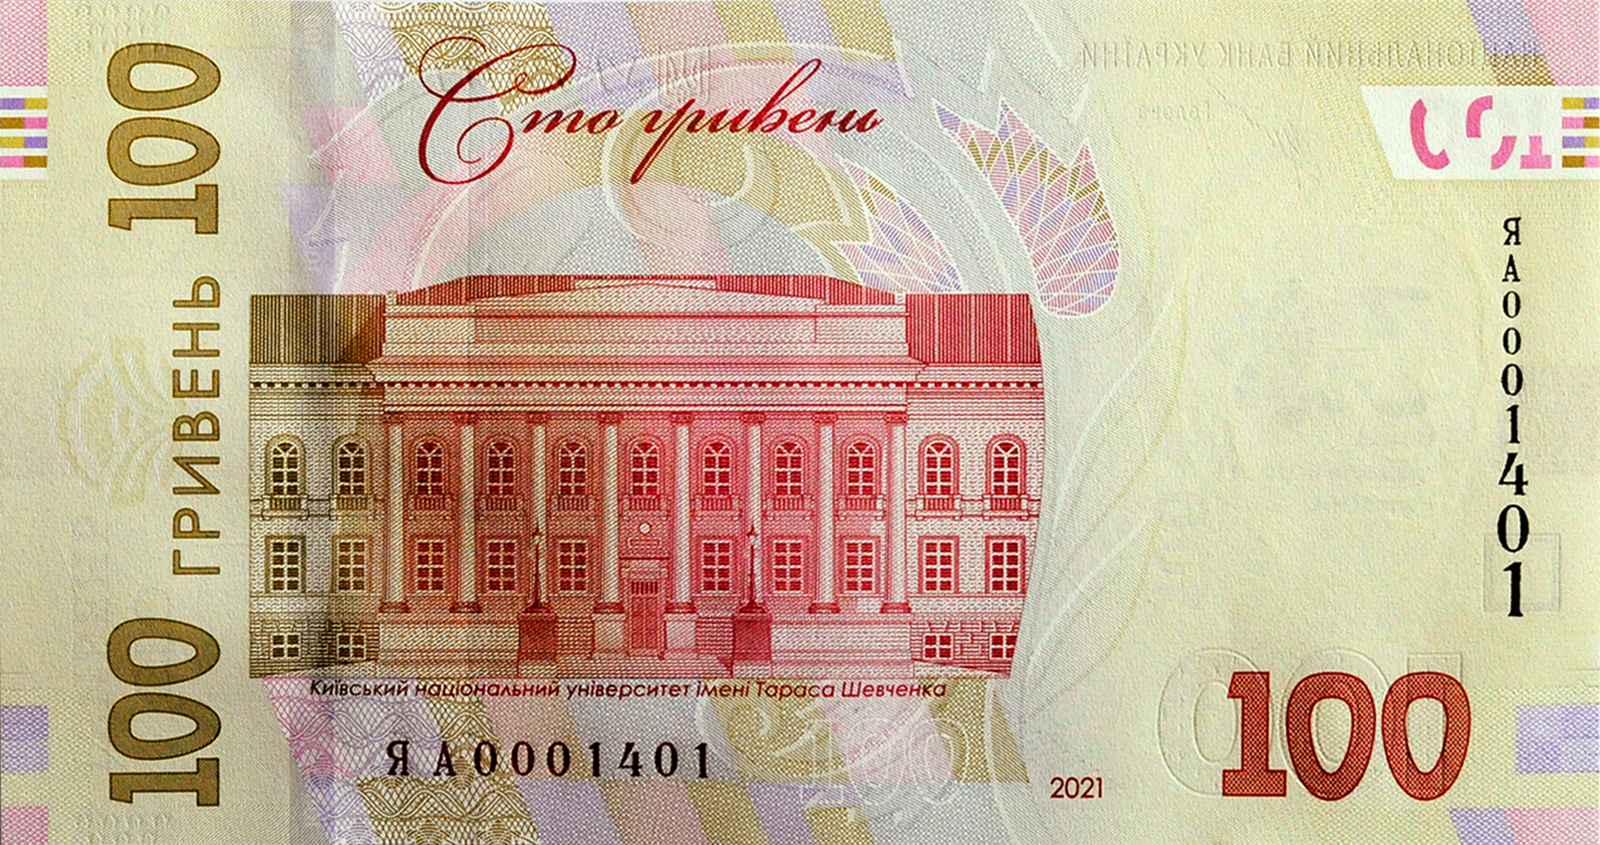 Сторона банкноты со зданием КНУ